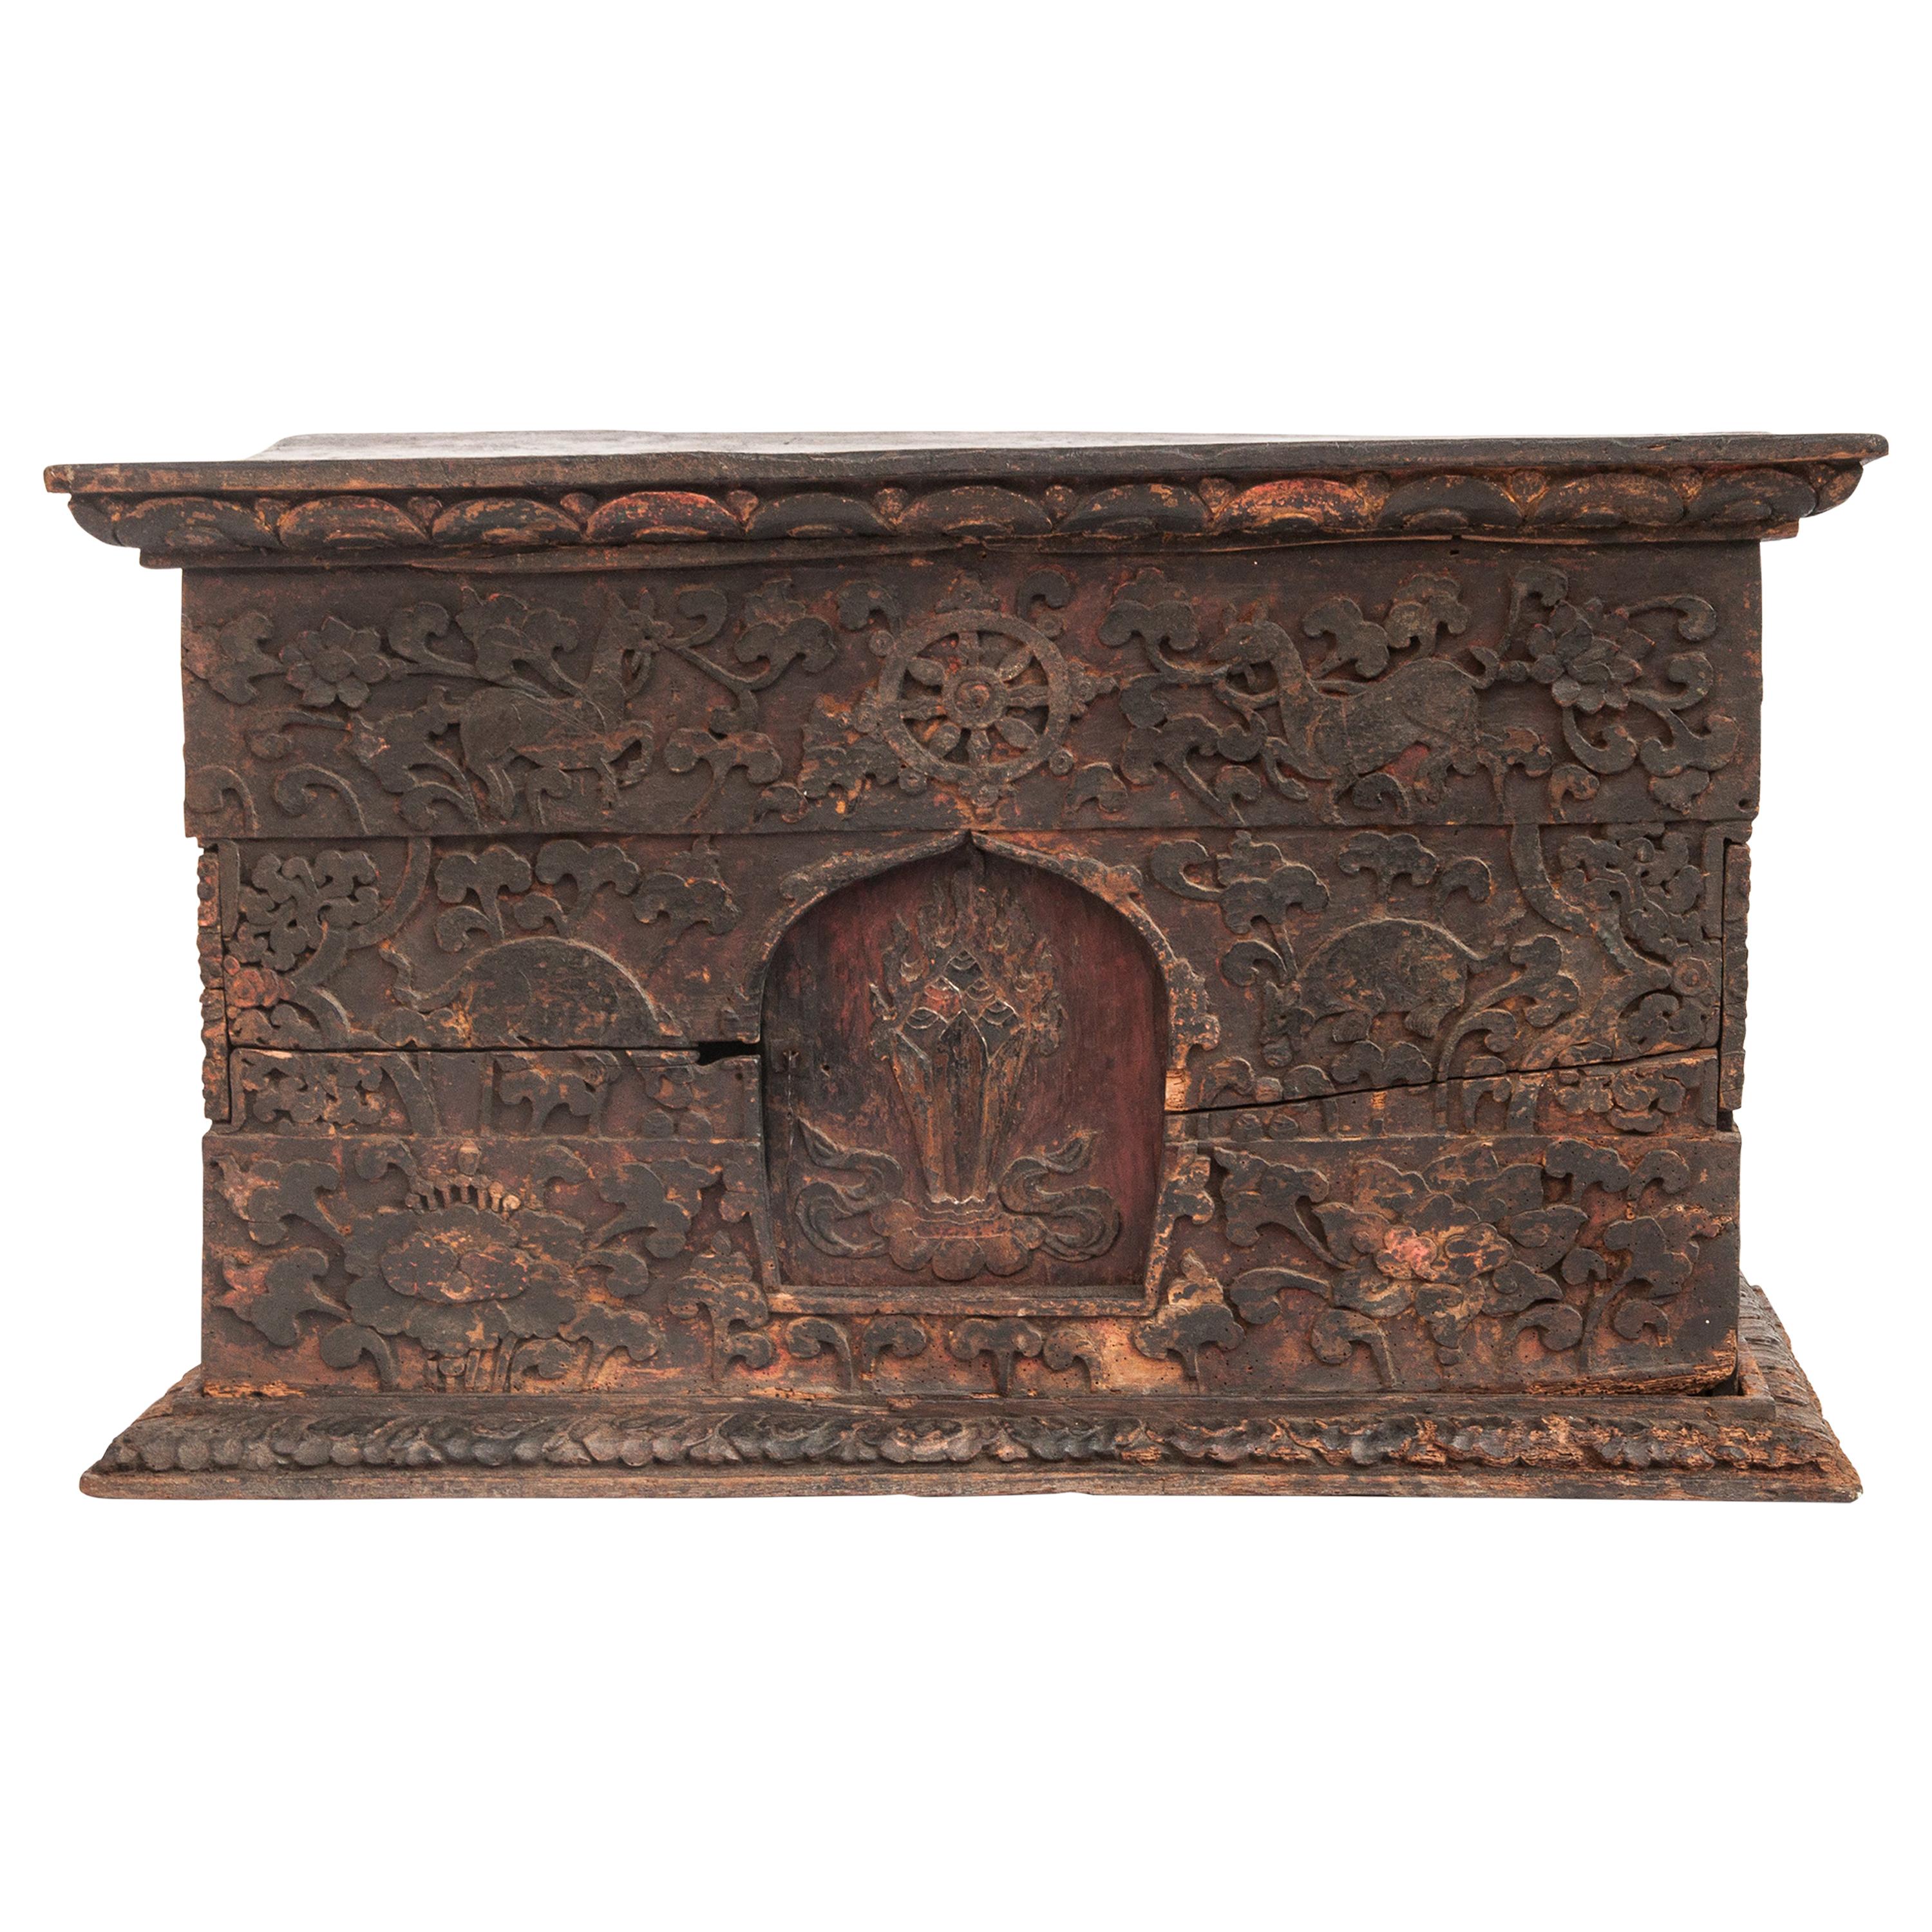 Antique Tibetan Style Religious Storage Box from Bhutan, 19th Century or Earlier